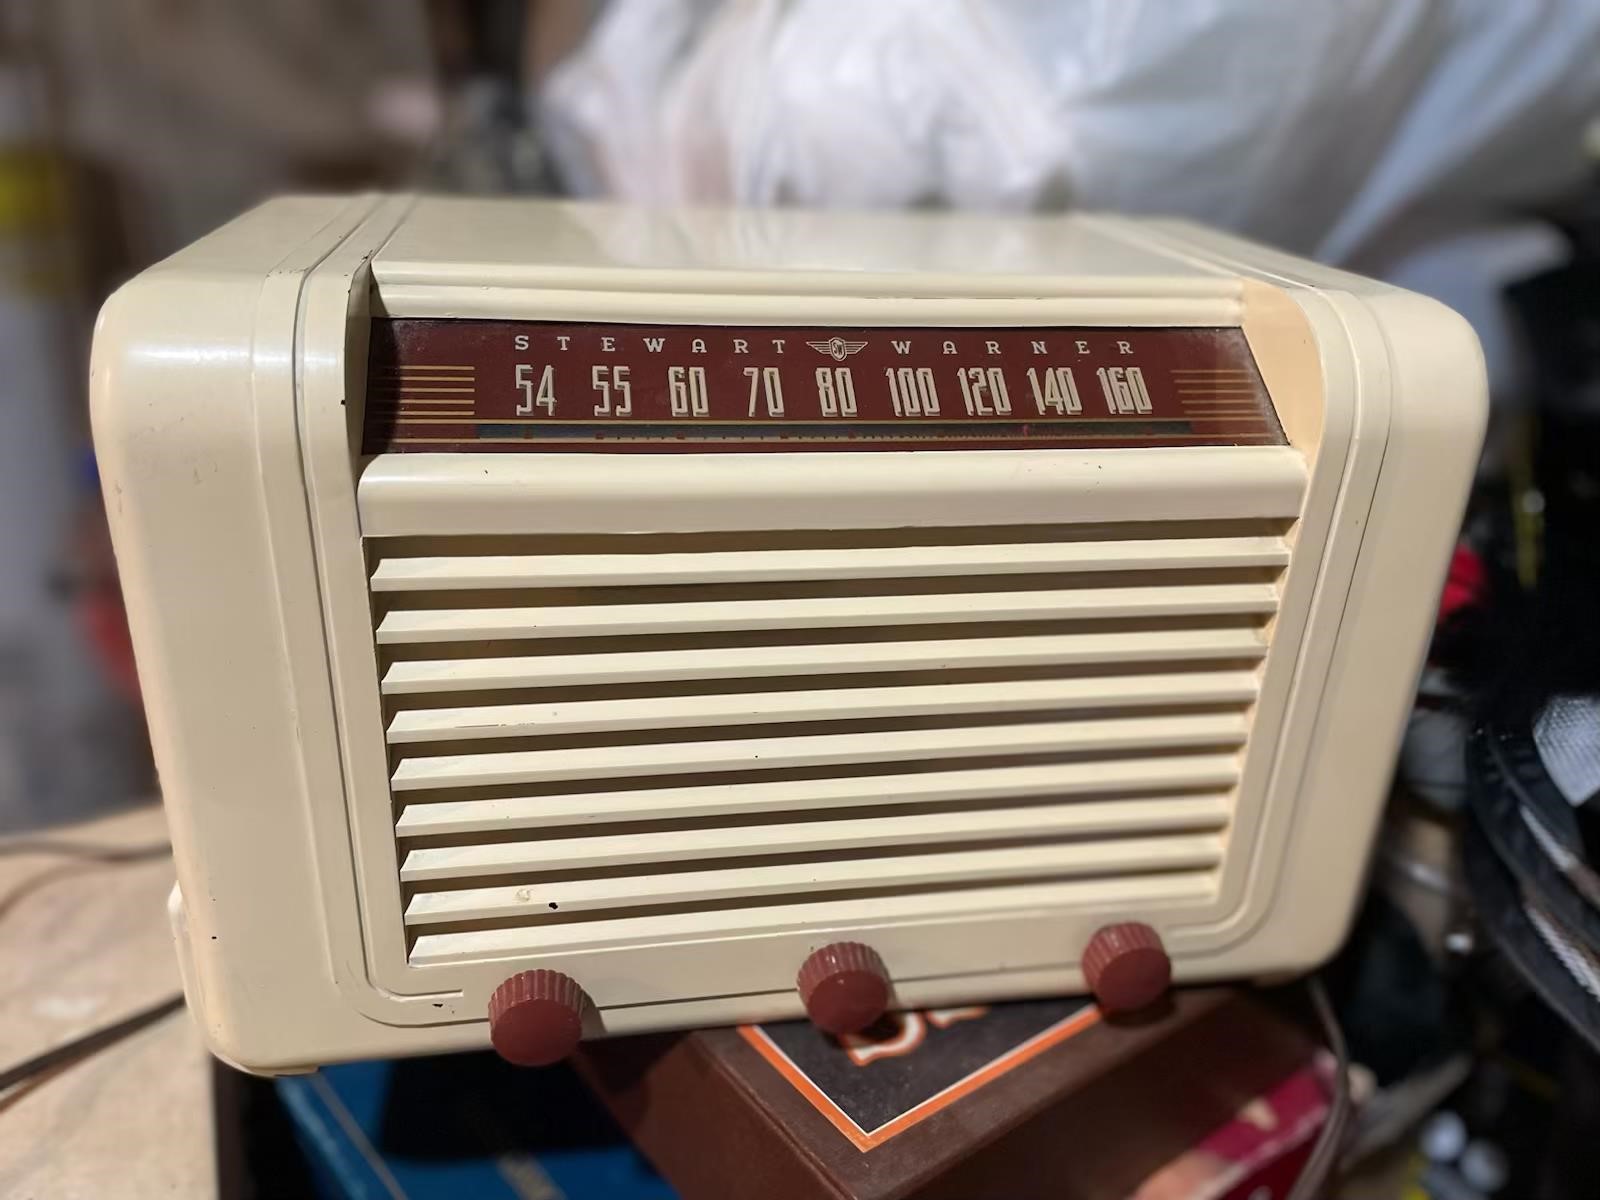 Stewart Warner Radio (probably 1946)